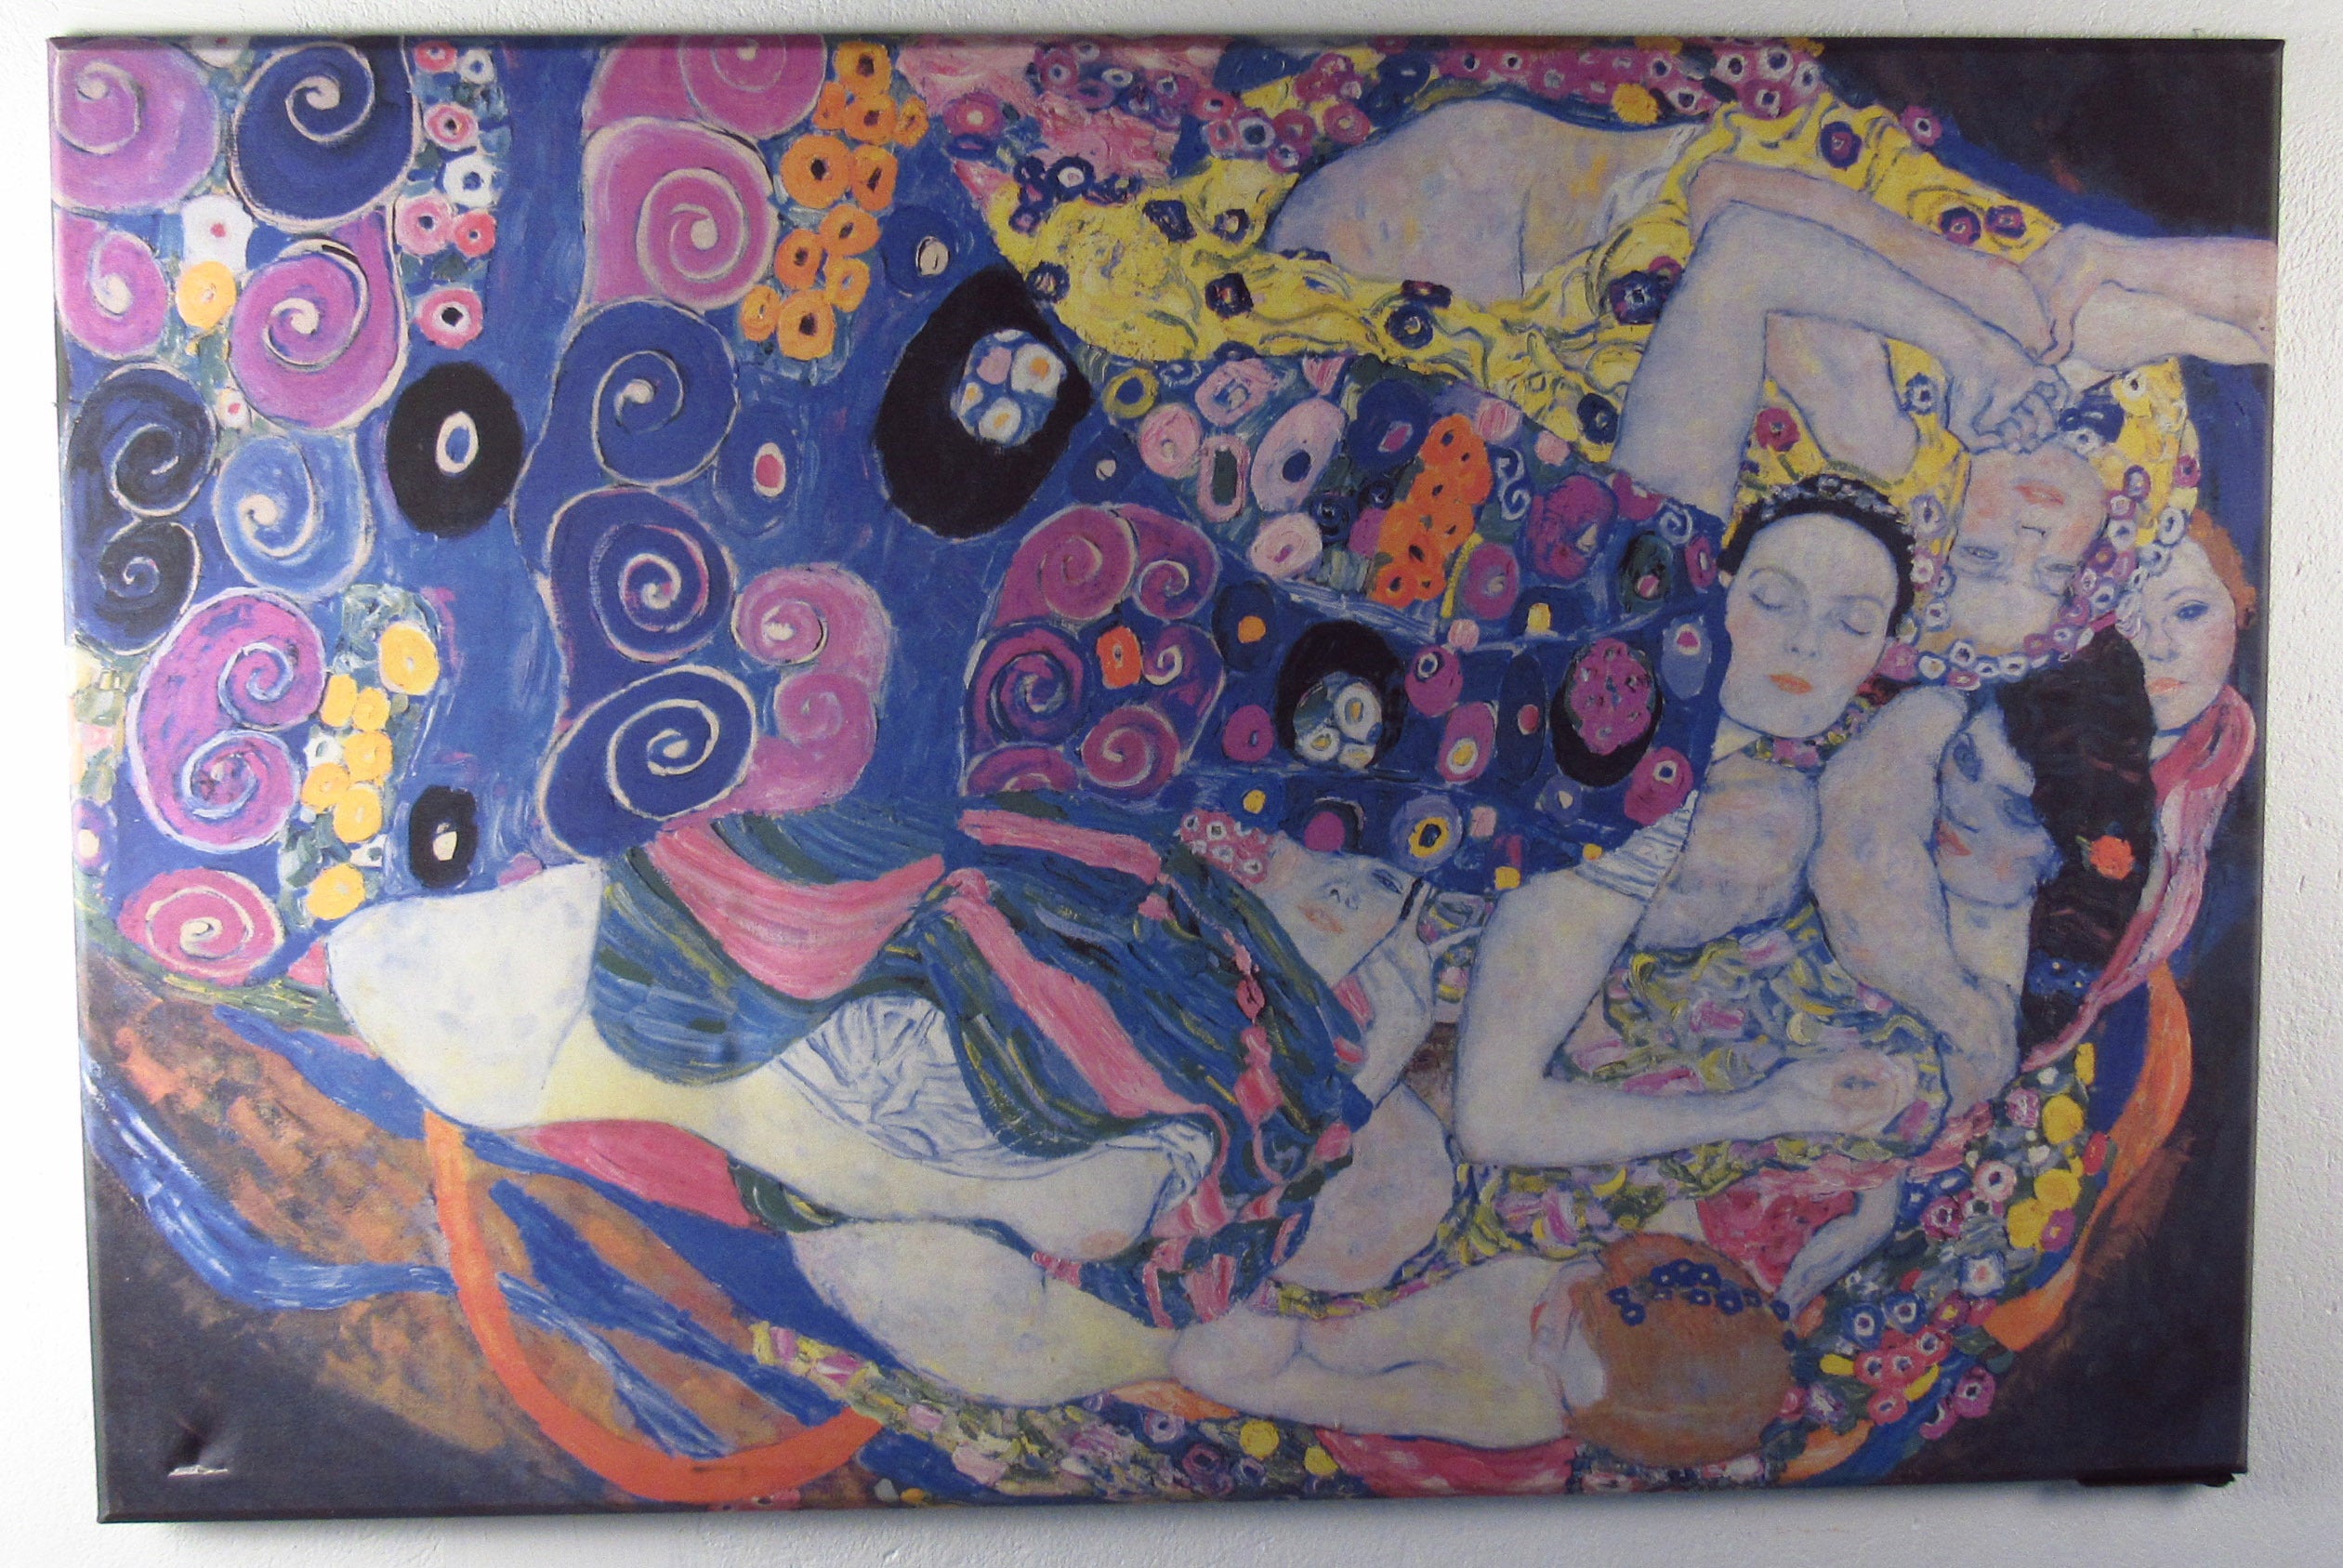 Fabric Print Of Women On Canvas "Le Virgin" G Klimt